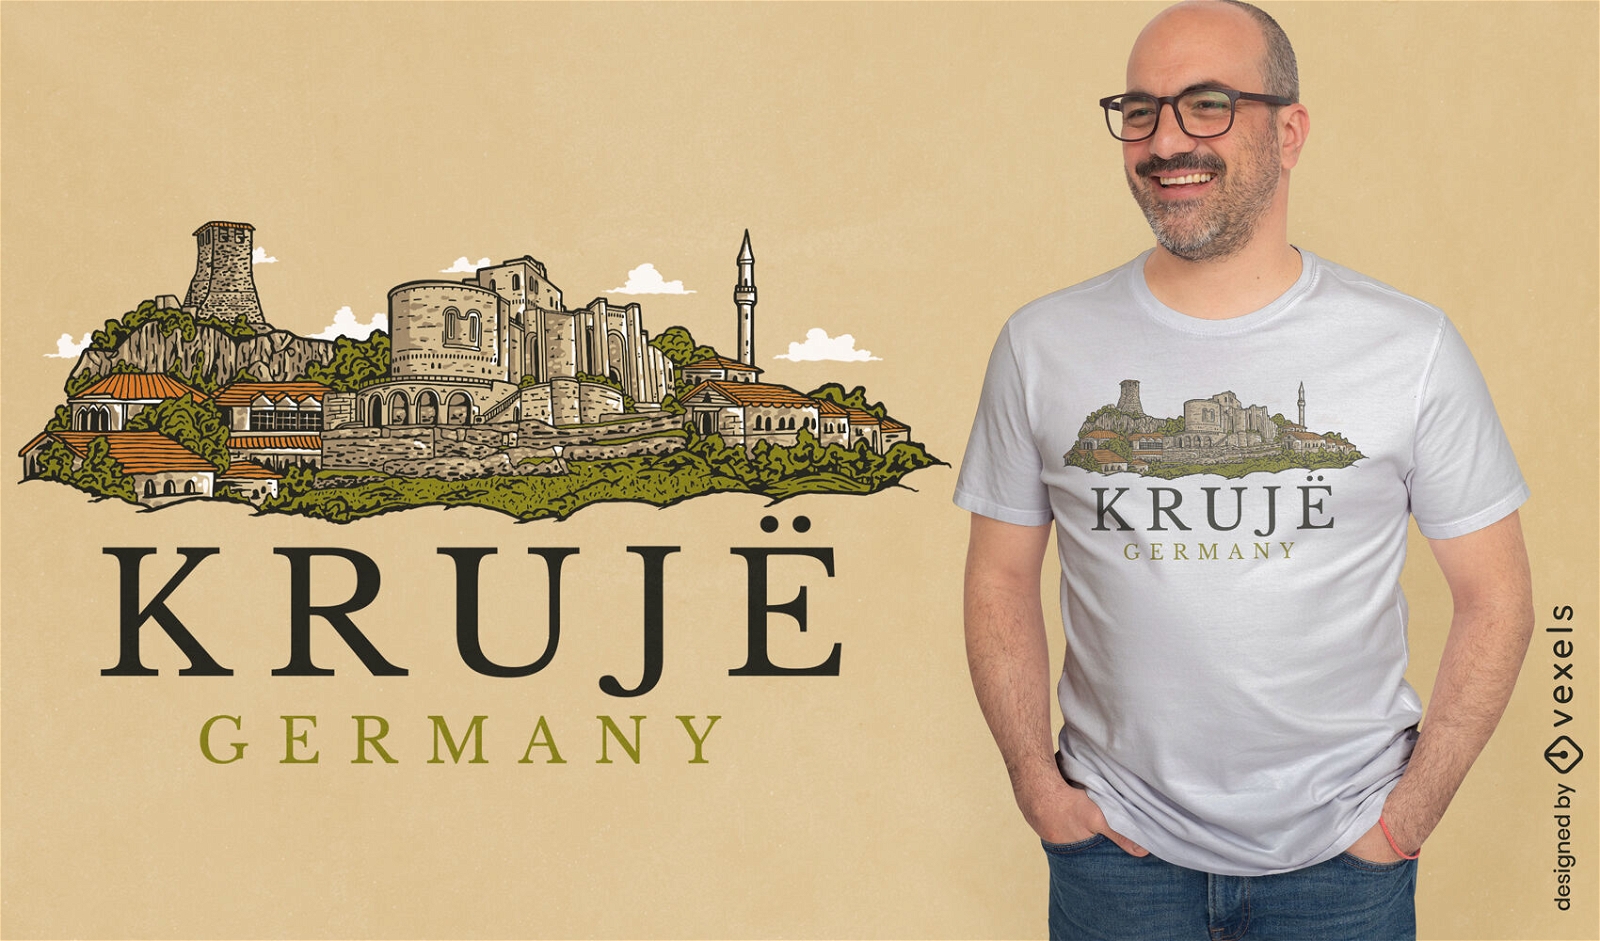 Dise?o de camiseta de ilustraci?n de la ciudad alemana de Kruje